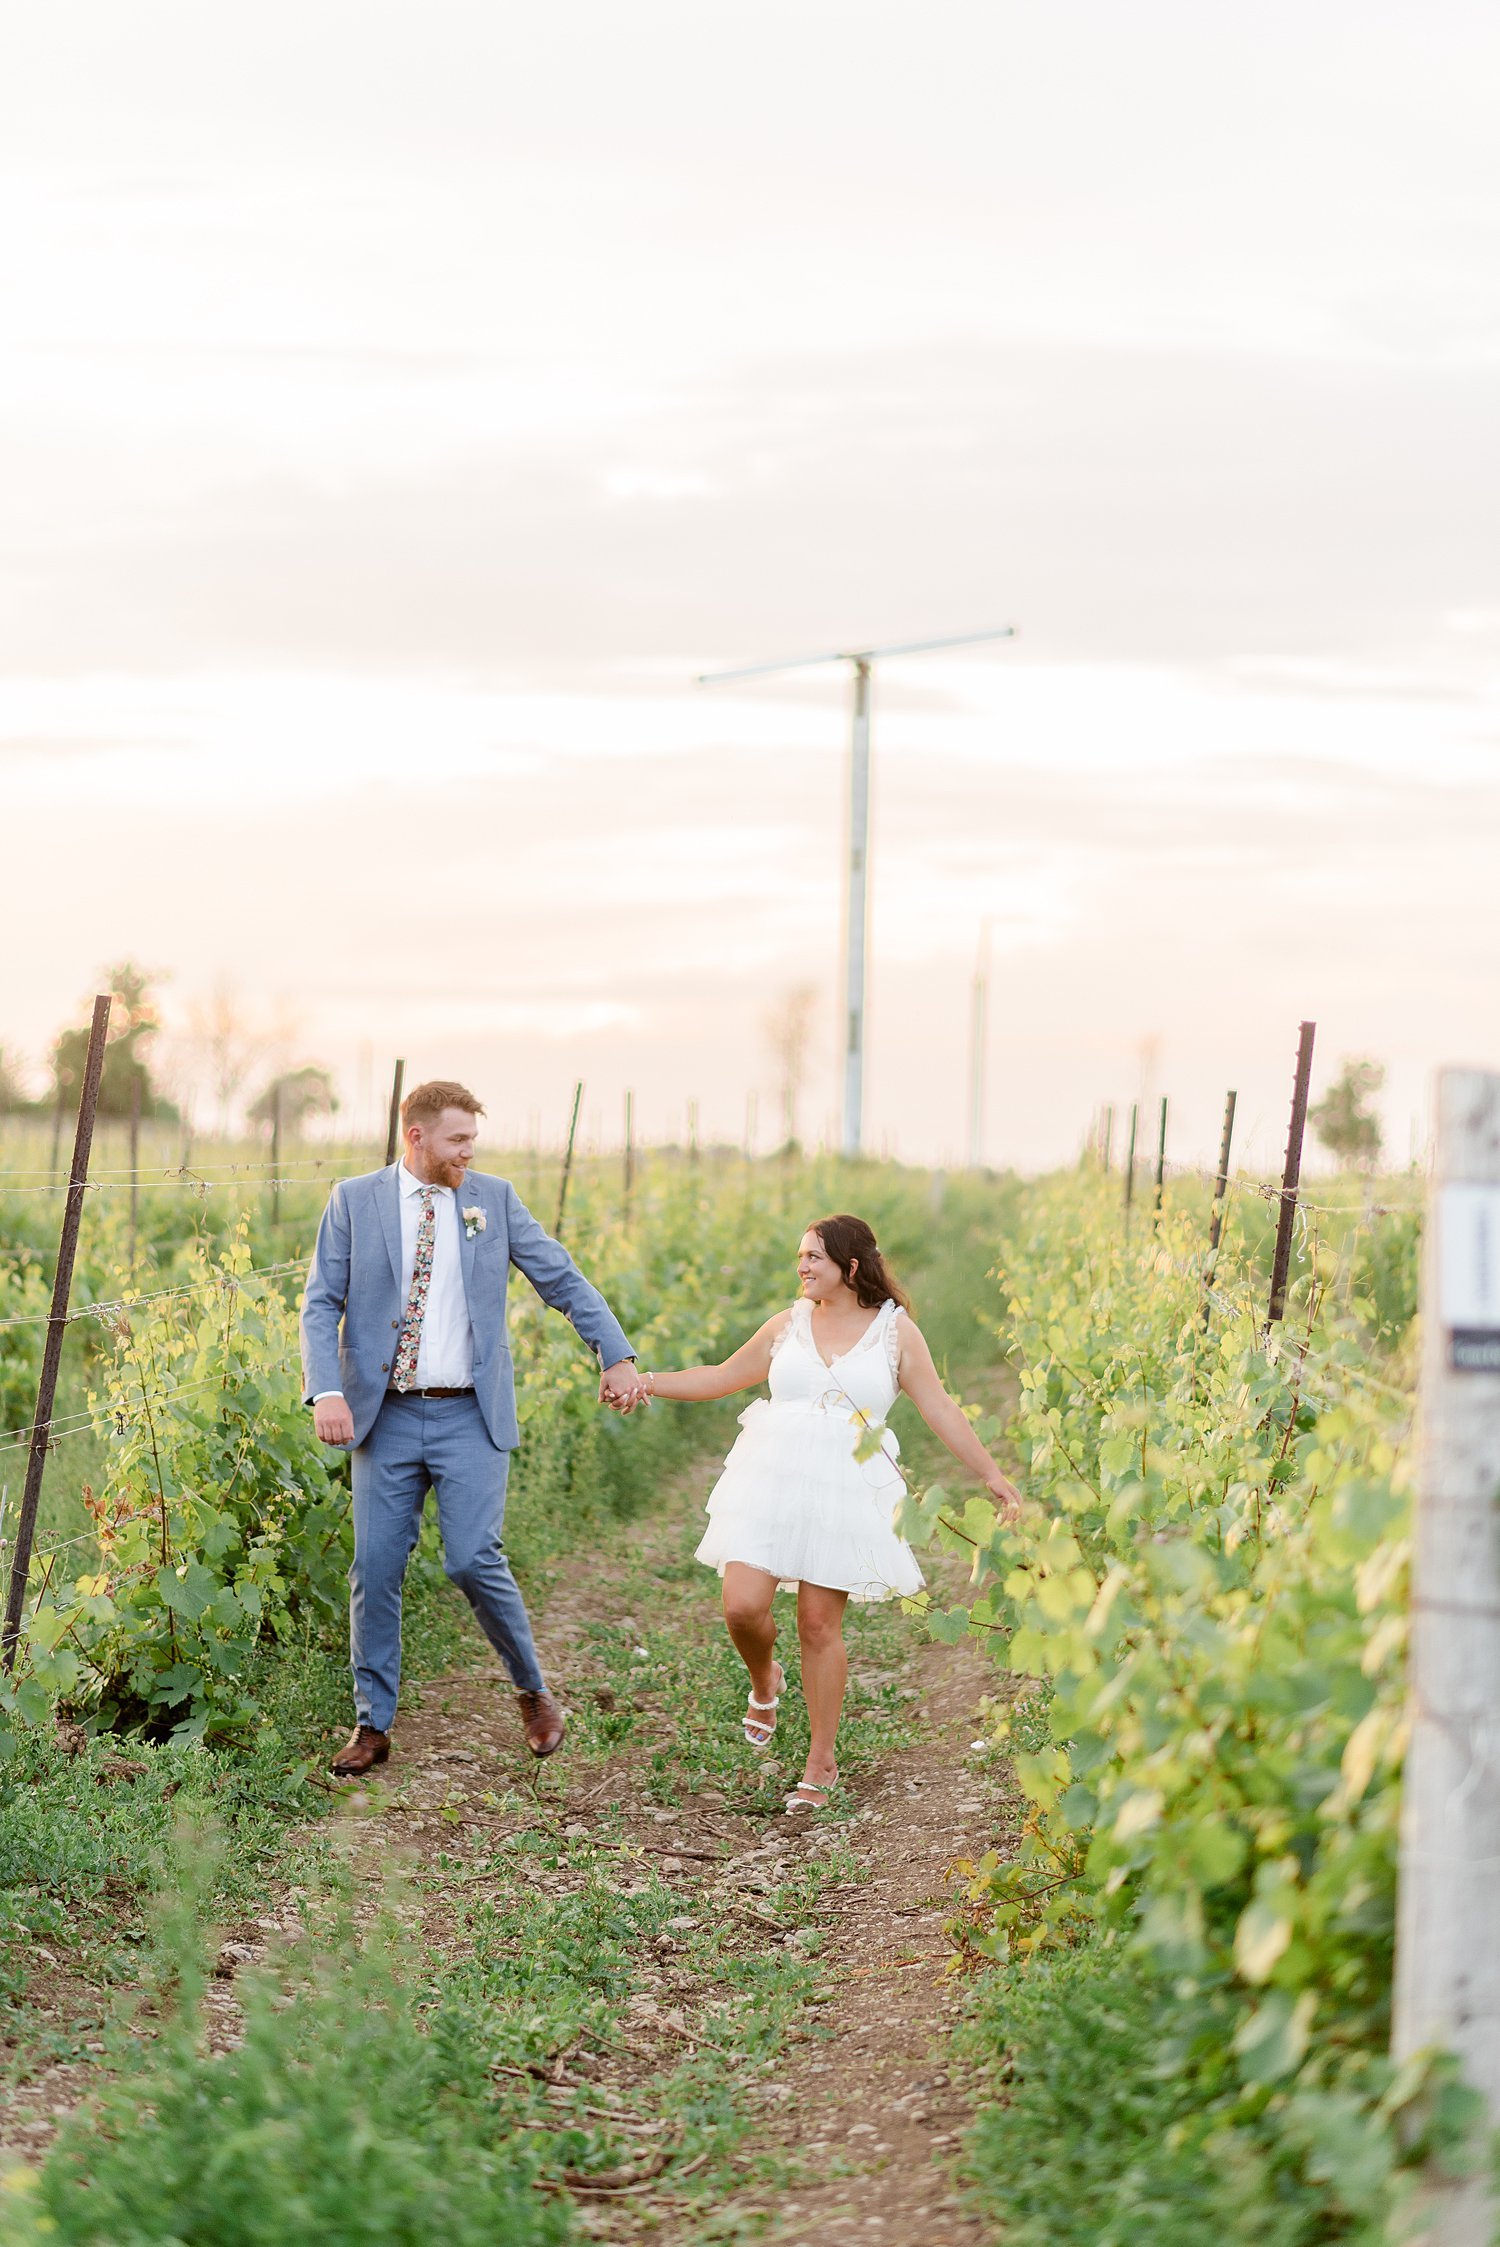 Casa Dea Winery Wedding in Prince Edward County | Prince Edward County Wedding Photographer | Holly McMurter Photographs_0123.jpg